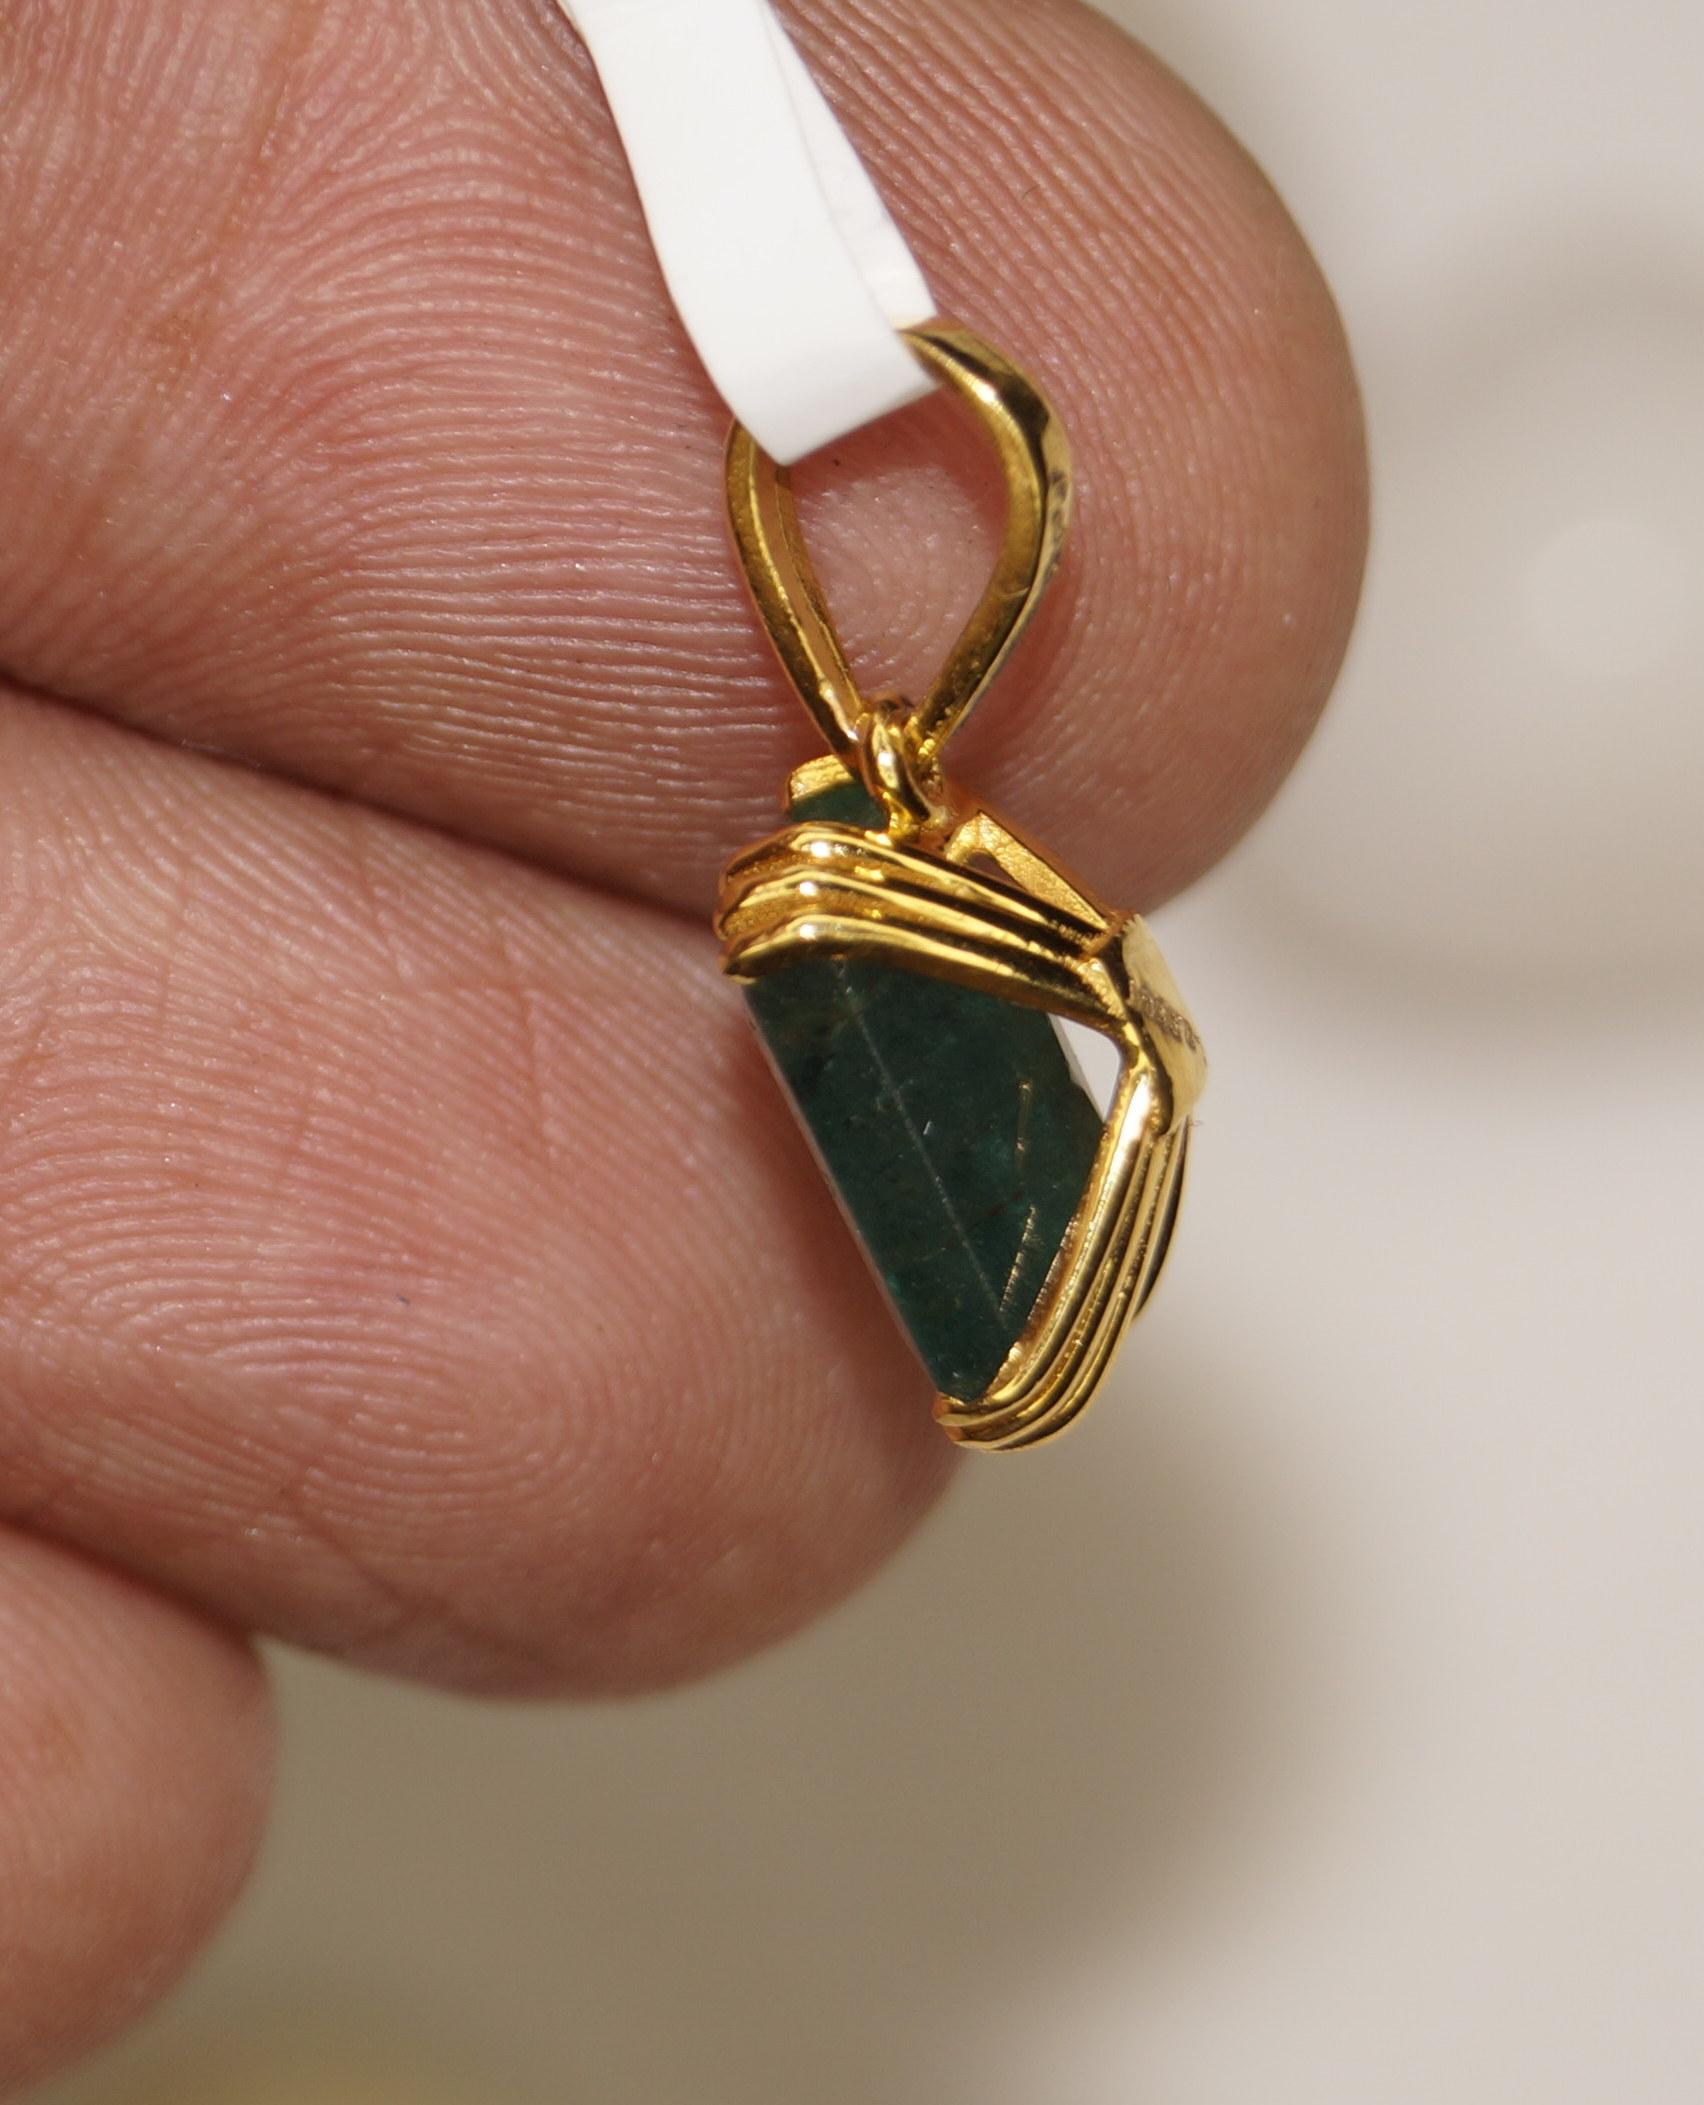 Octagon Cut Emerald 2.96carat Certified Natural 18K Solid Gold Hallmark Drop Pendant For Sale